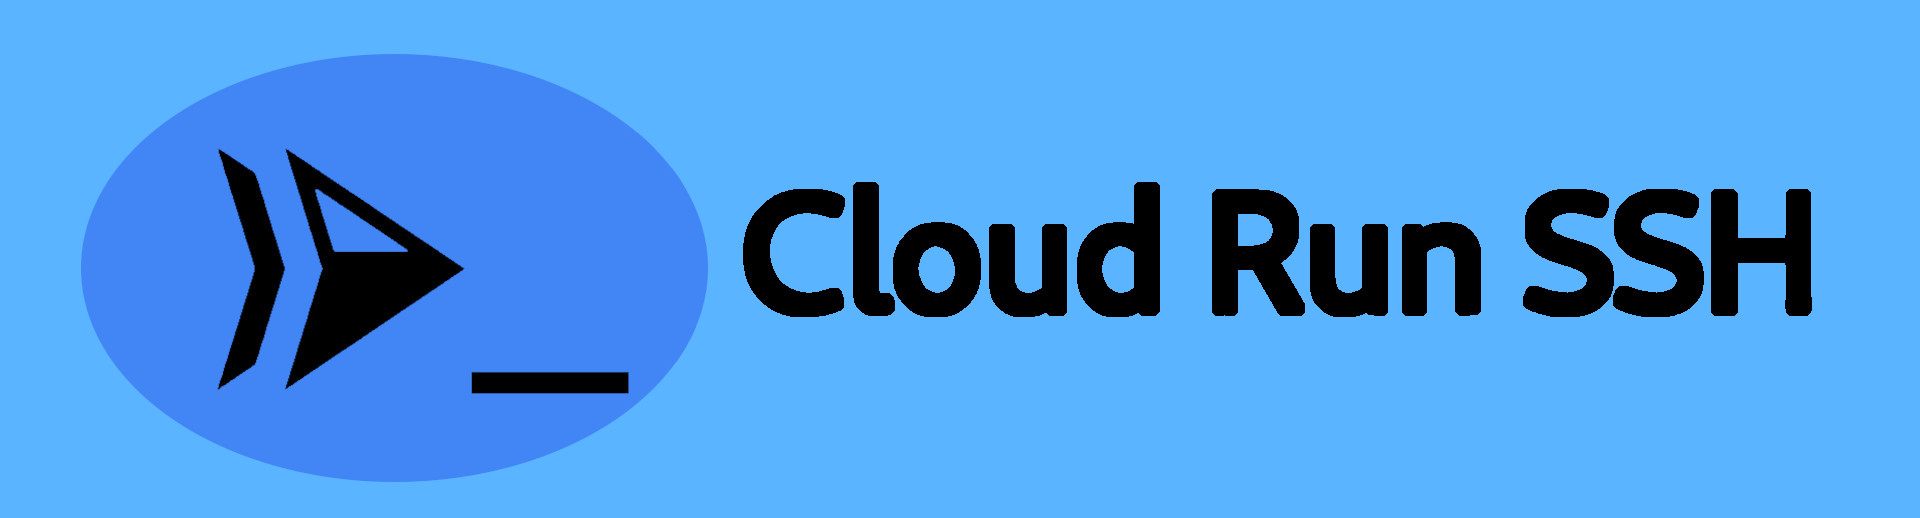 Cloud Run SSH logo